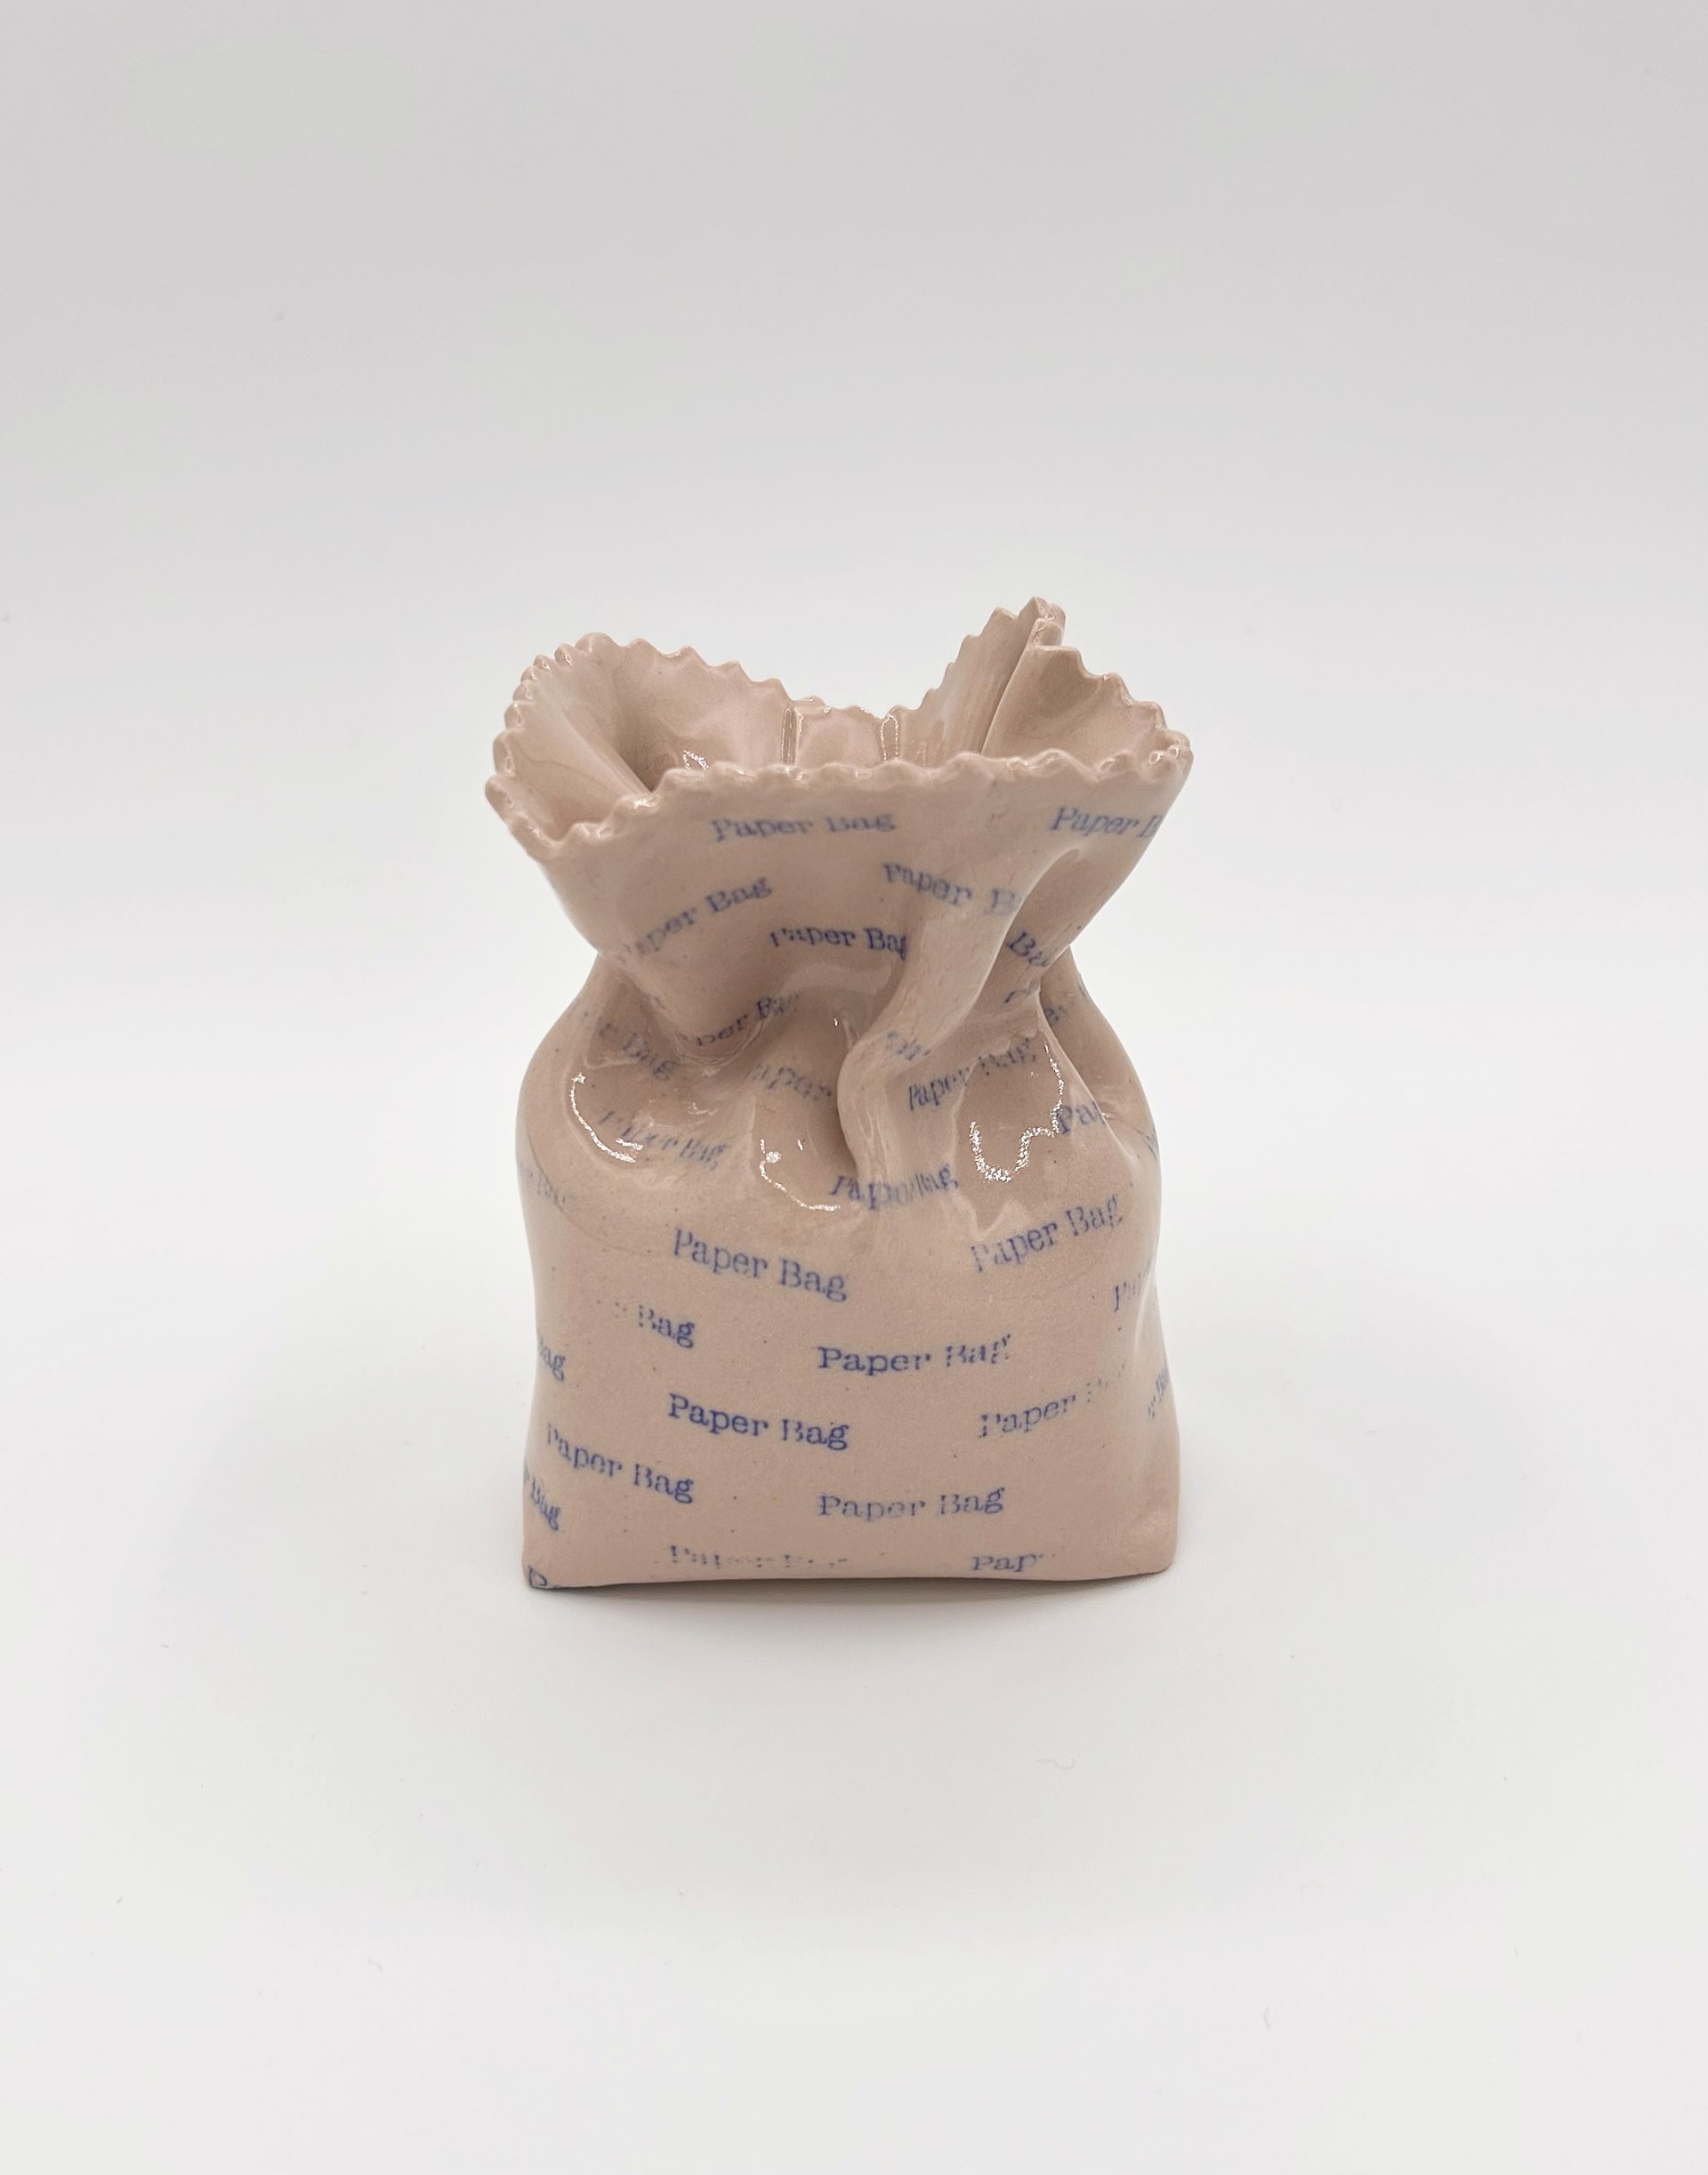 Paper Bag on Repeat by Chandra Beadleston